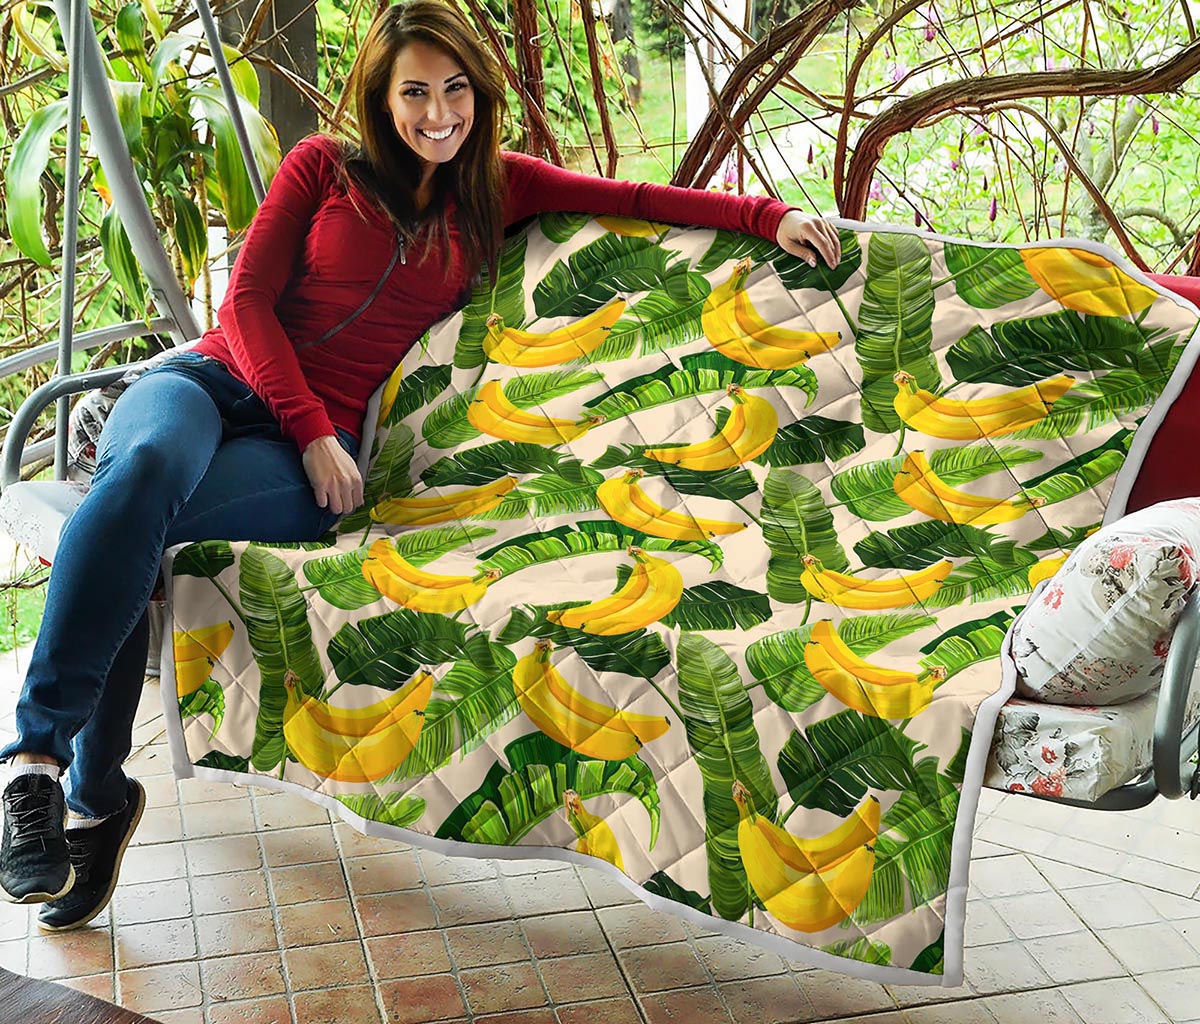 Aloha Banana Pattern Print Quilt